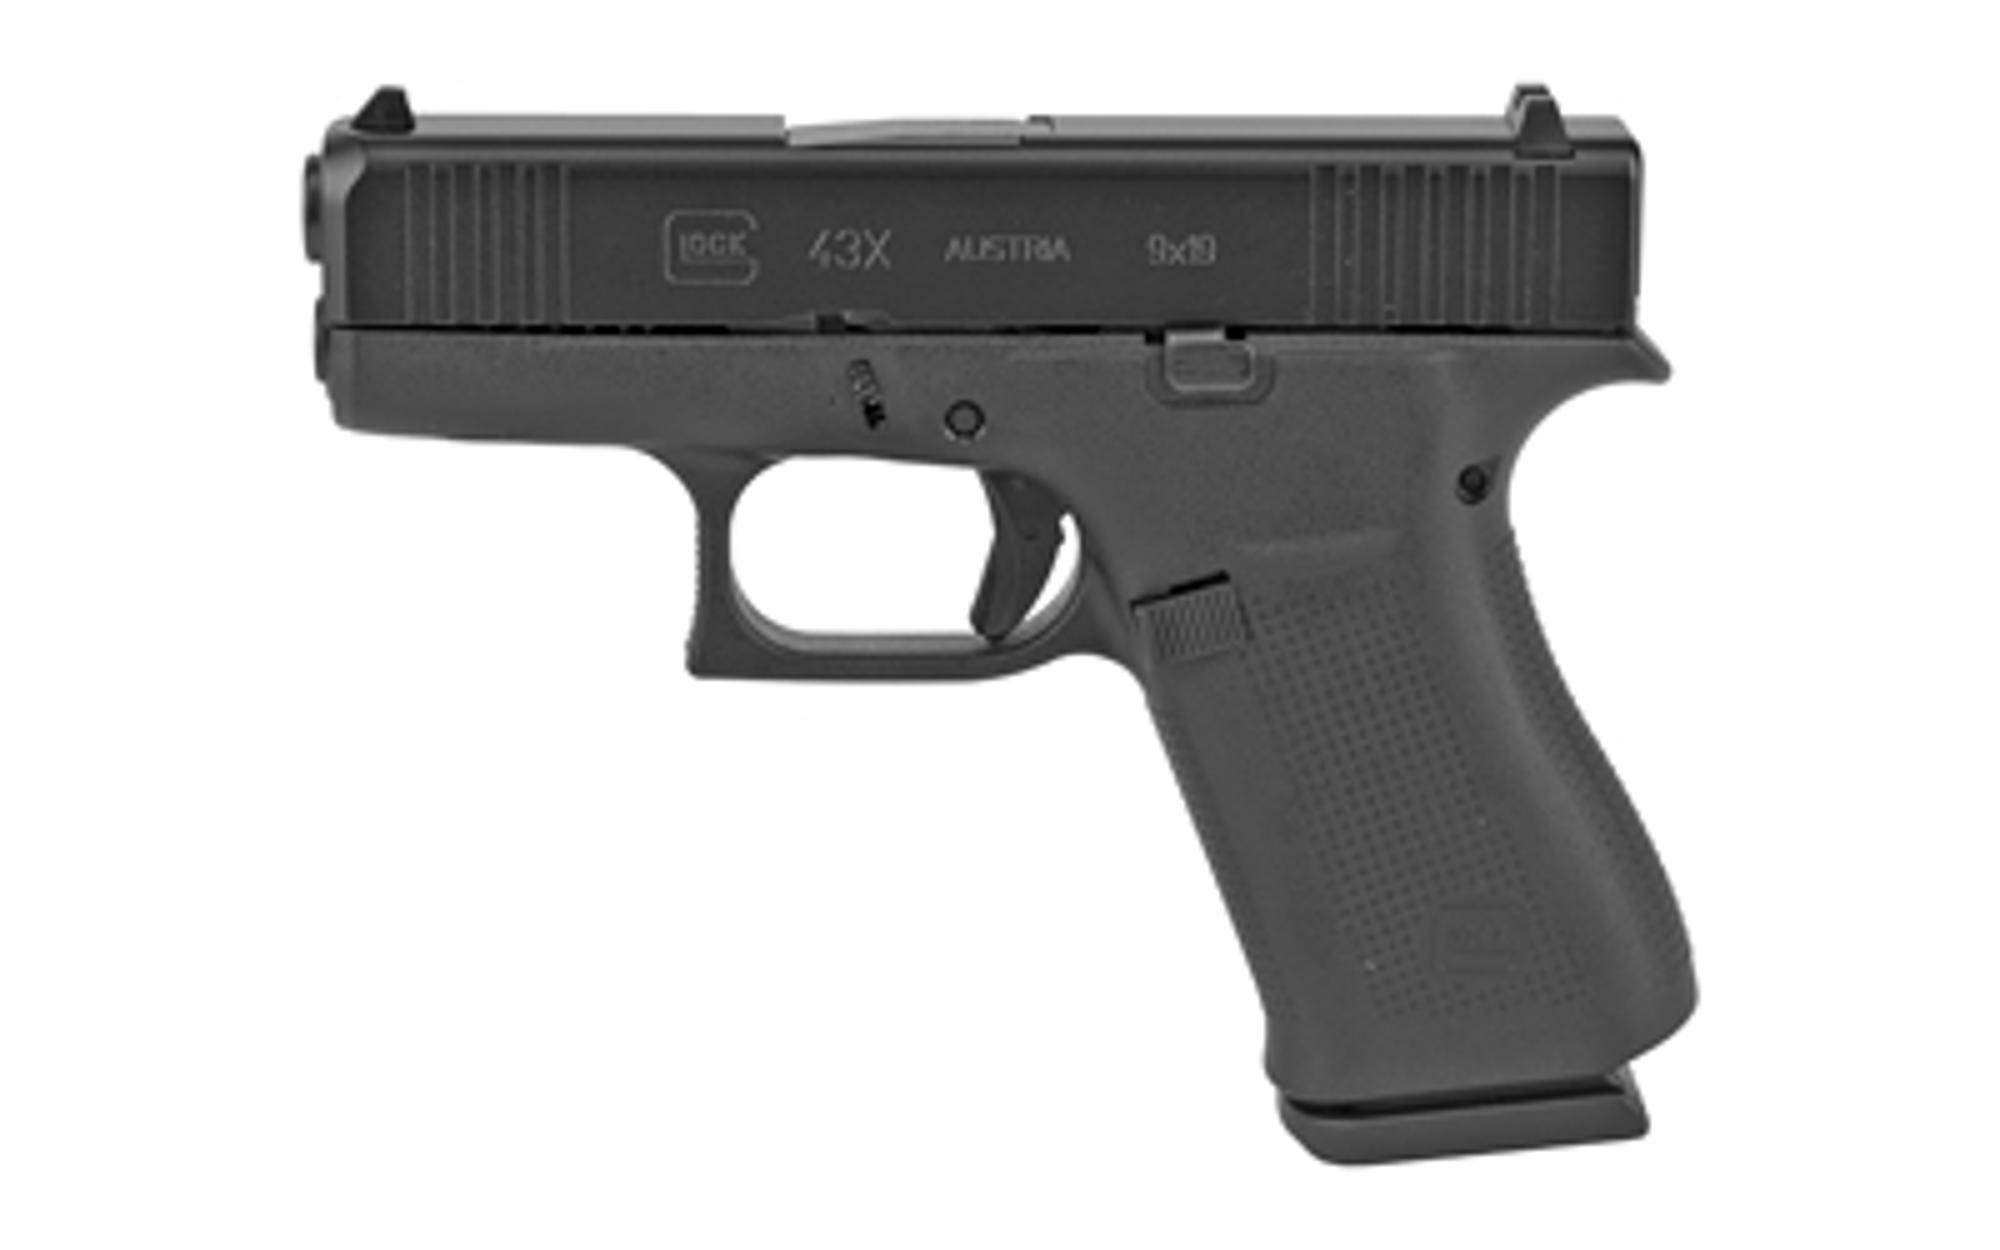 Glock G43x Sub- Compact Pistol